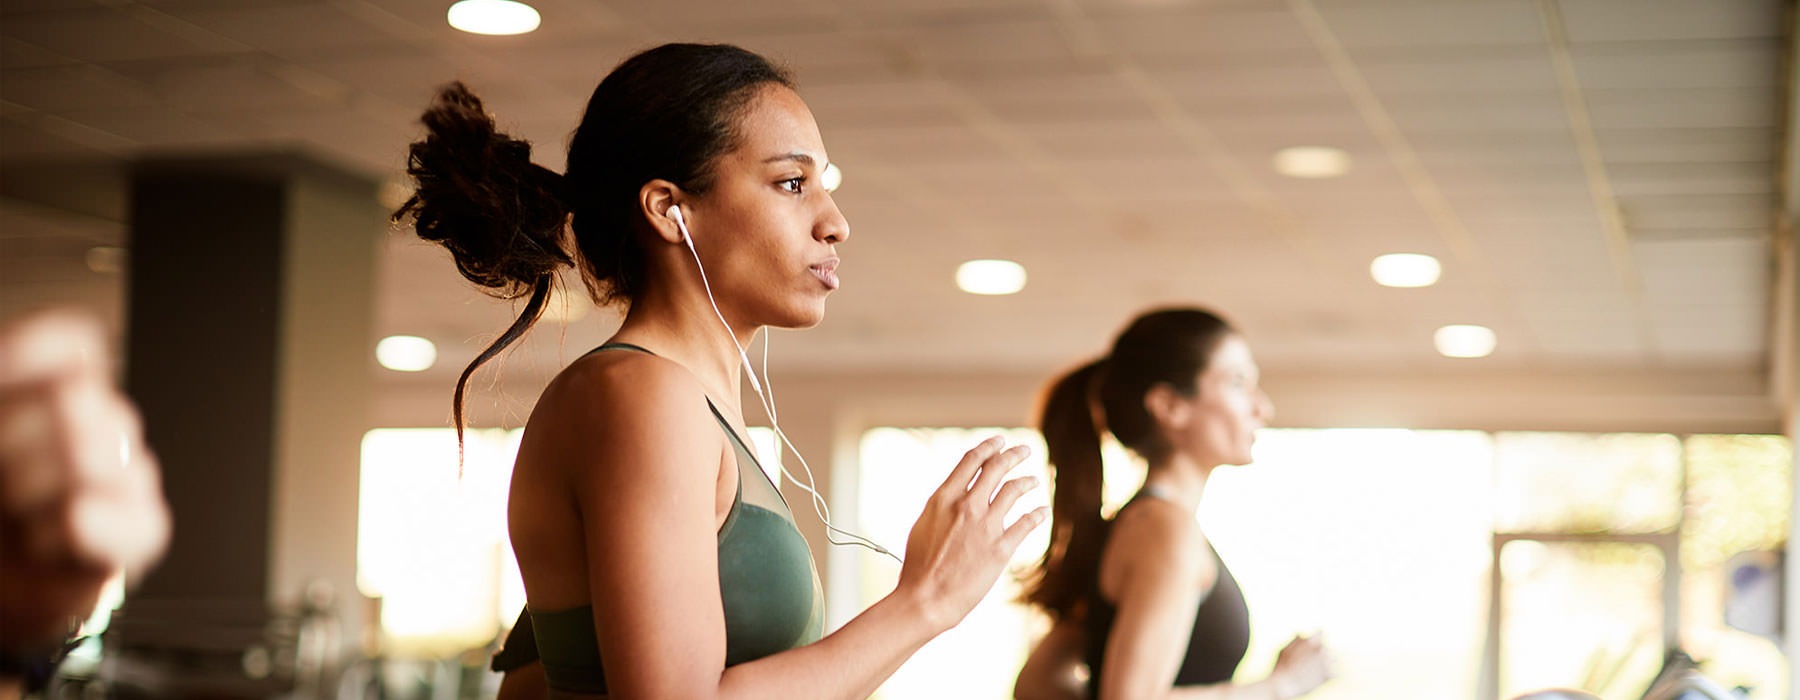 Young woman running on treadmill, wearing earphones